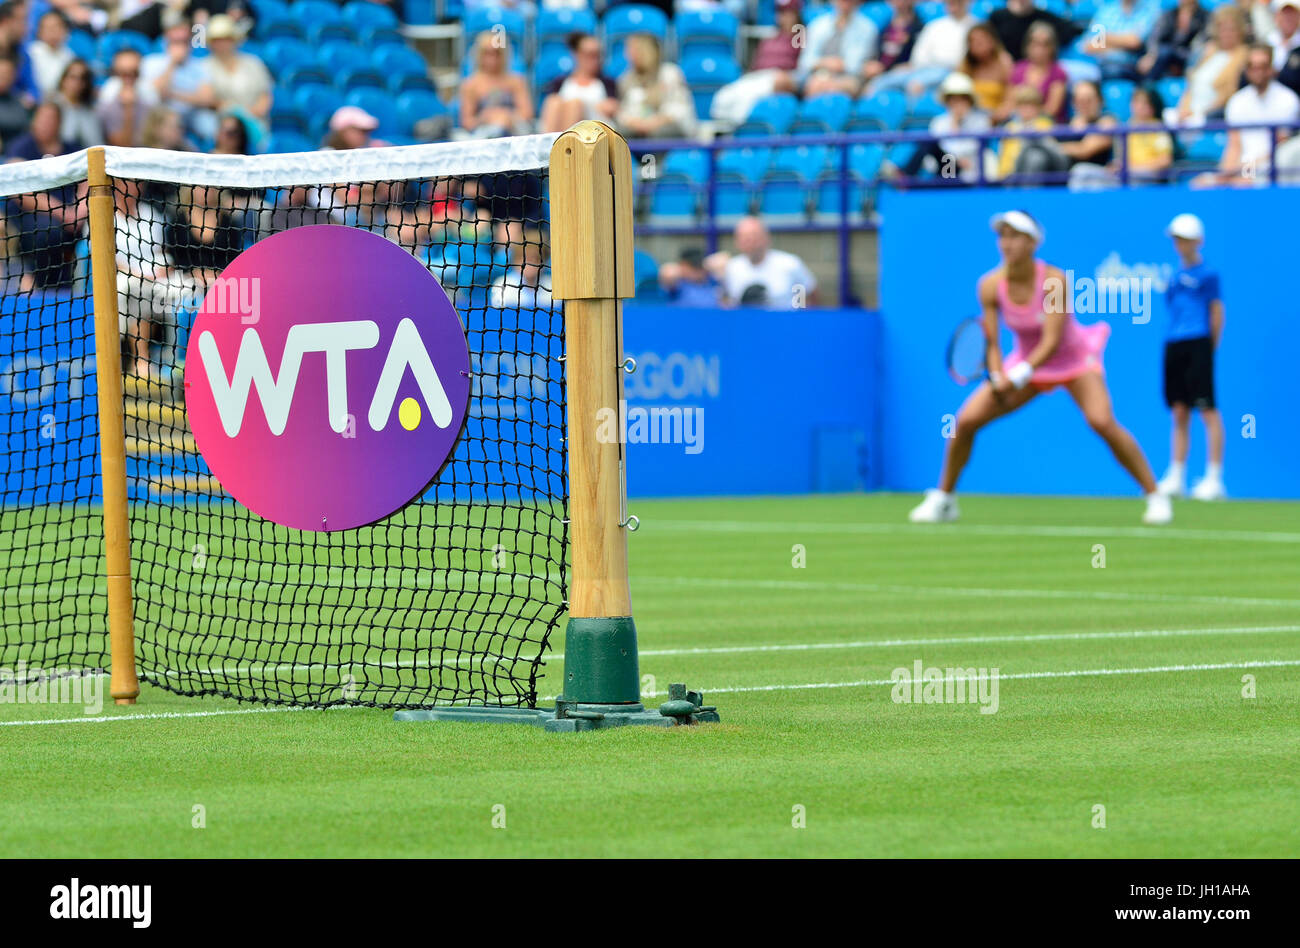 WTA (Women's Tennis Association) logo on the net at the Aegon International, Devonshire Park, Eastbourne 2017 Stock Photo